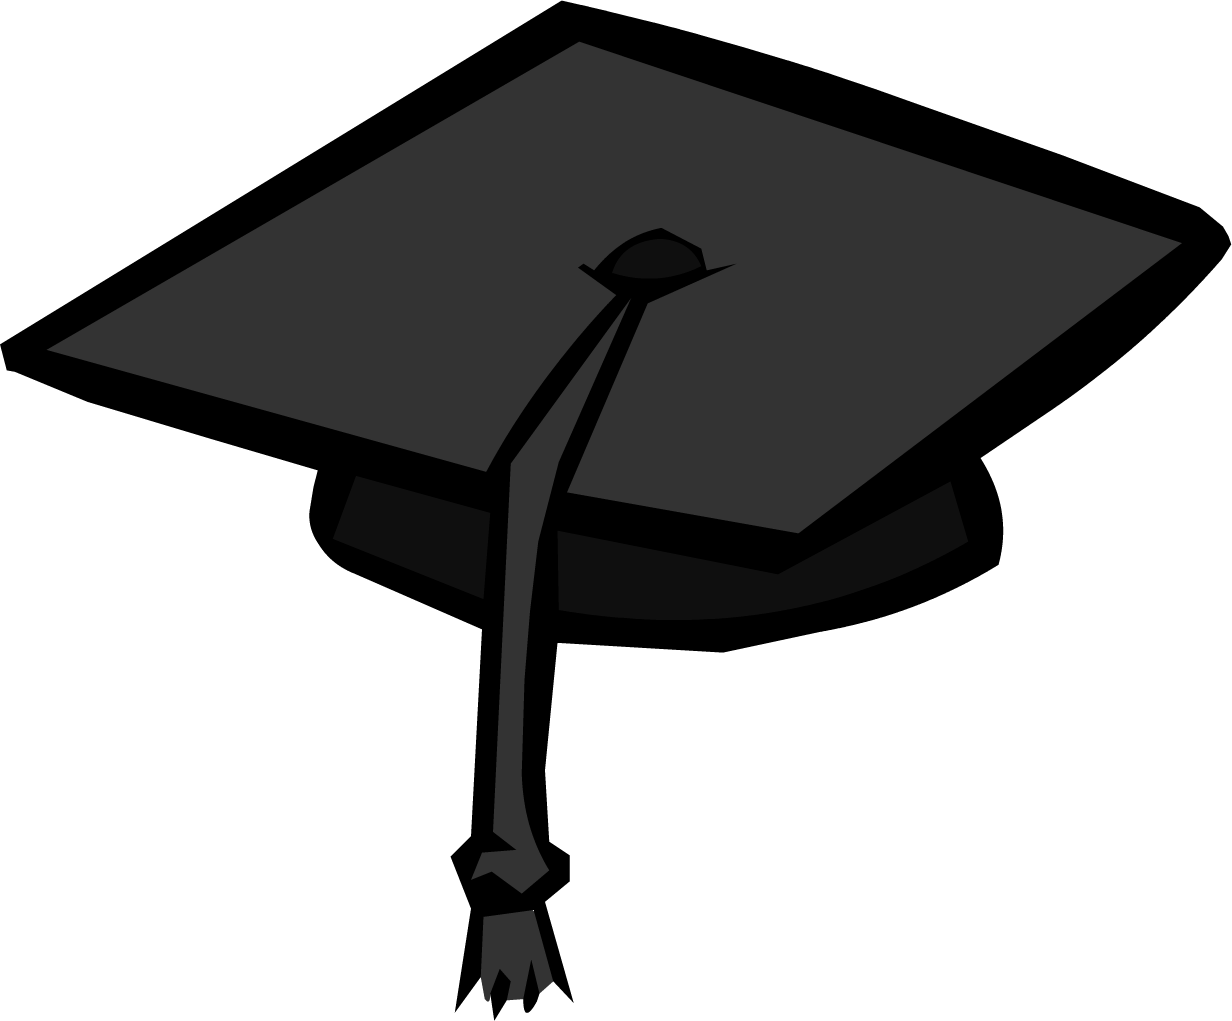 Black Graduation Cap - Club Penguin Wiki - The free, editable ...